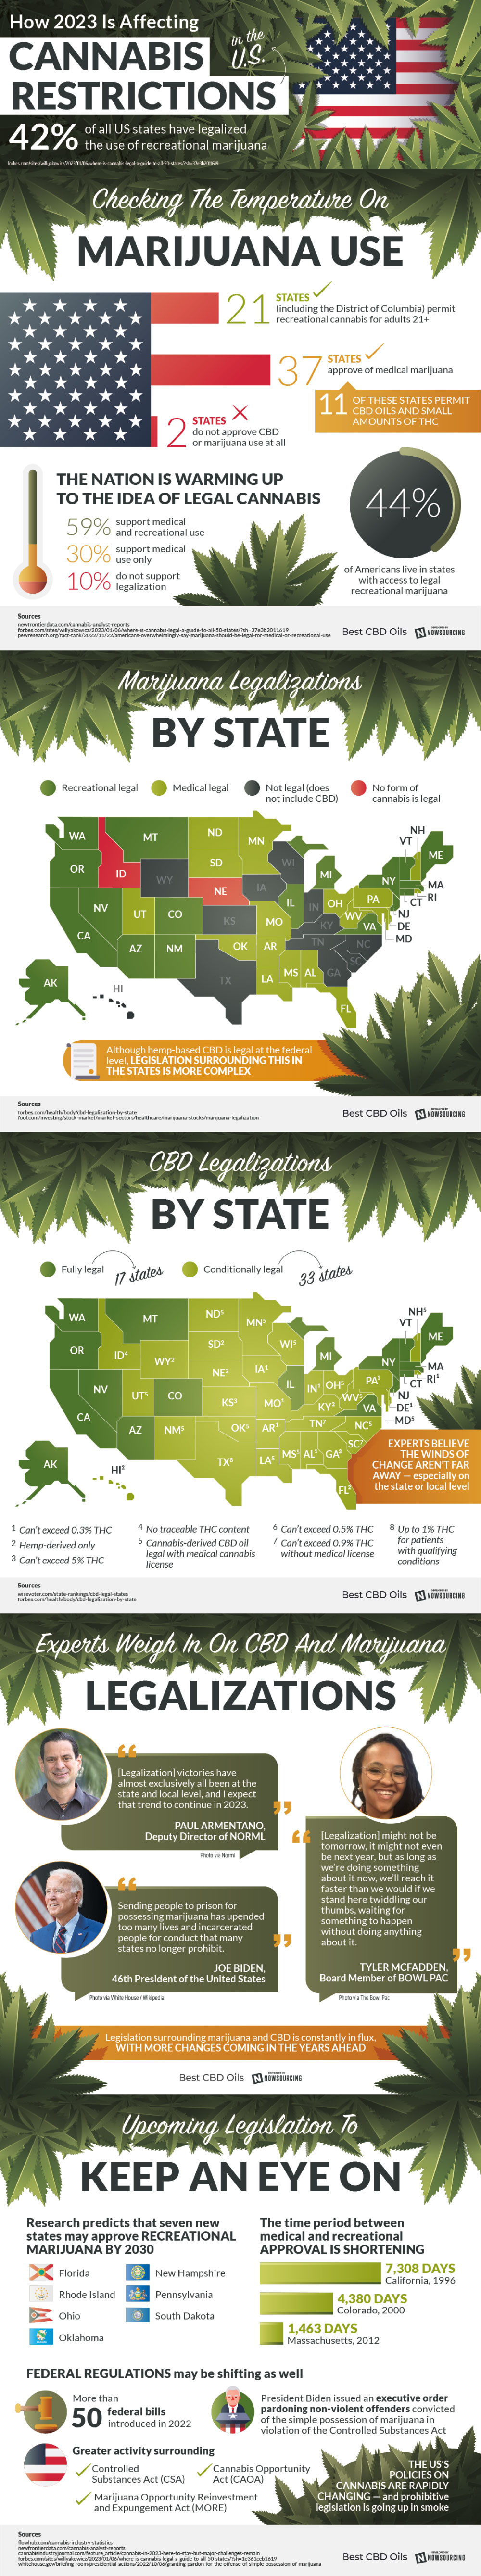 Cannabis Legalization Across the U.S.